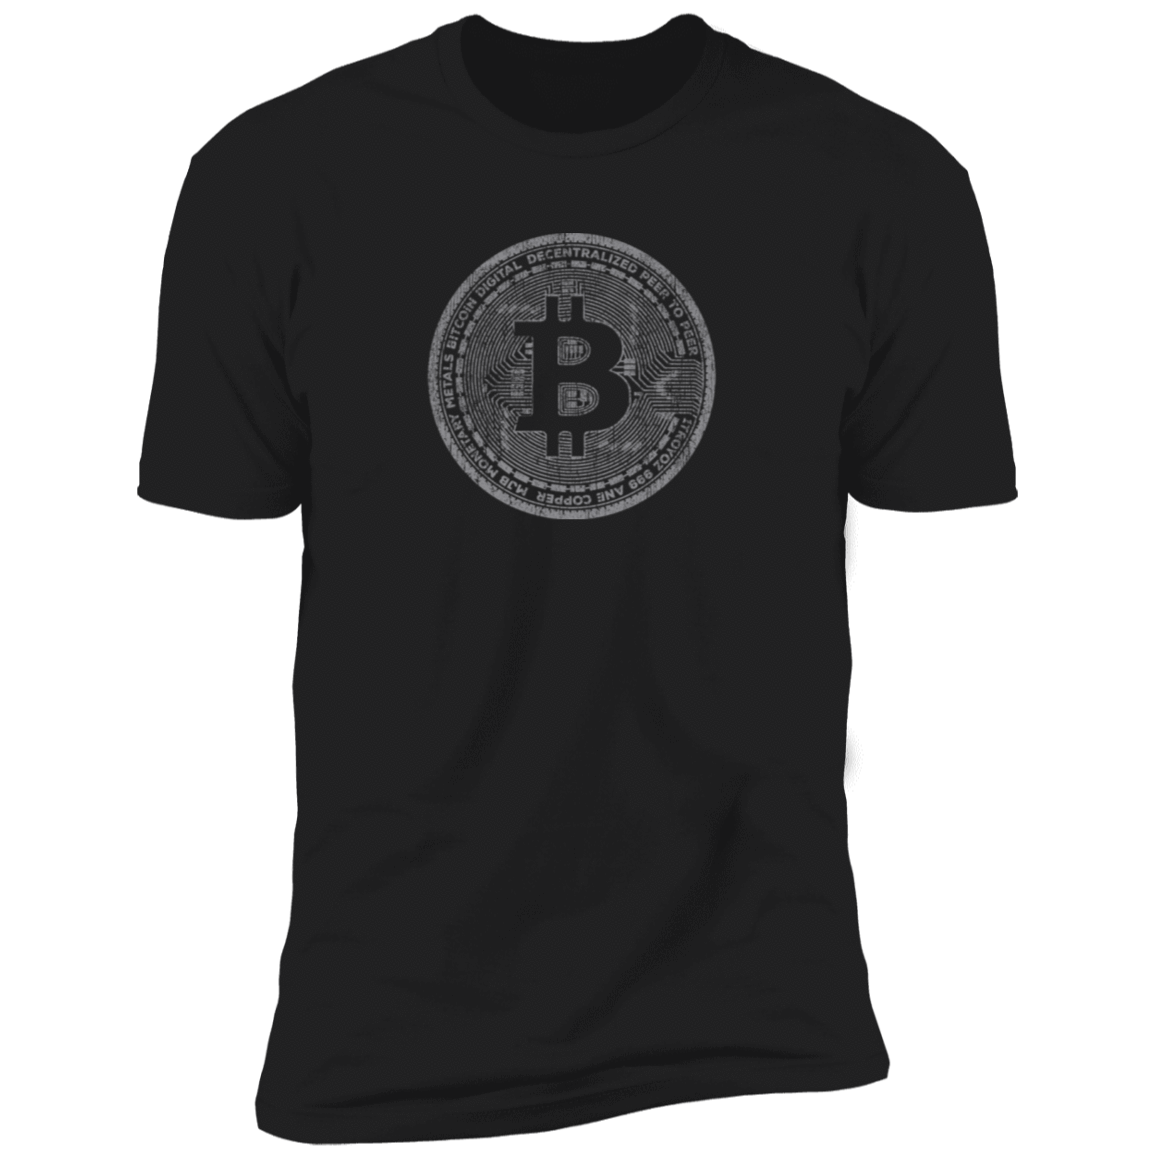 Vintage Bitcoin Coin T-Shirt